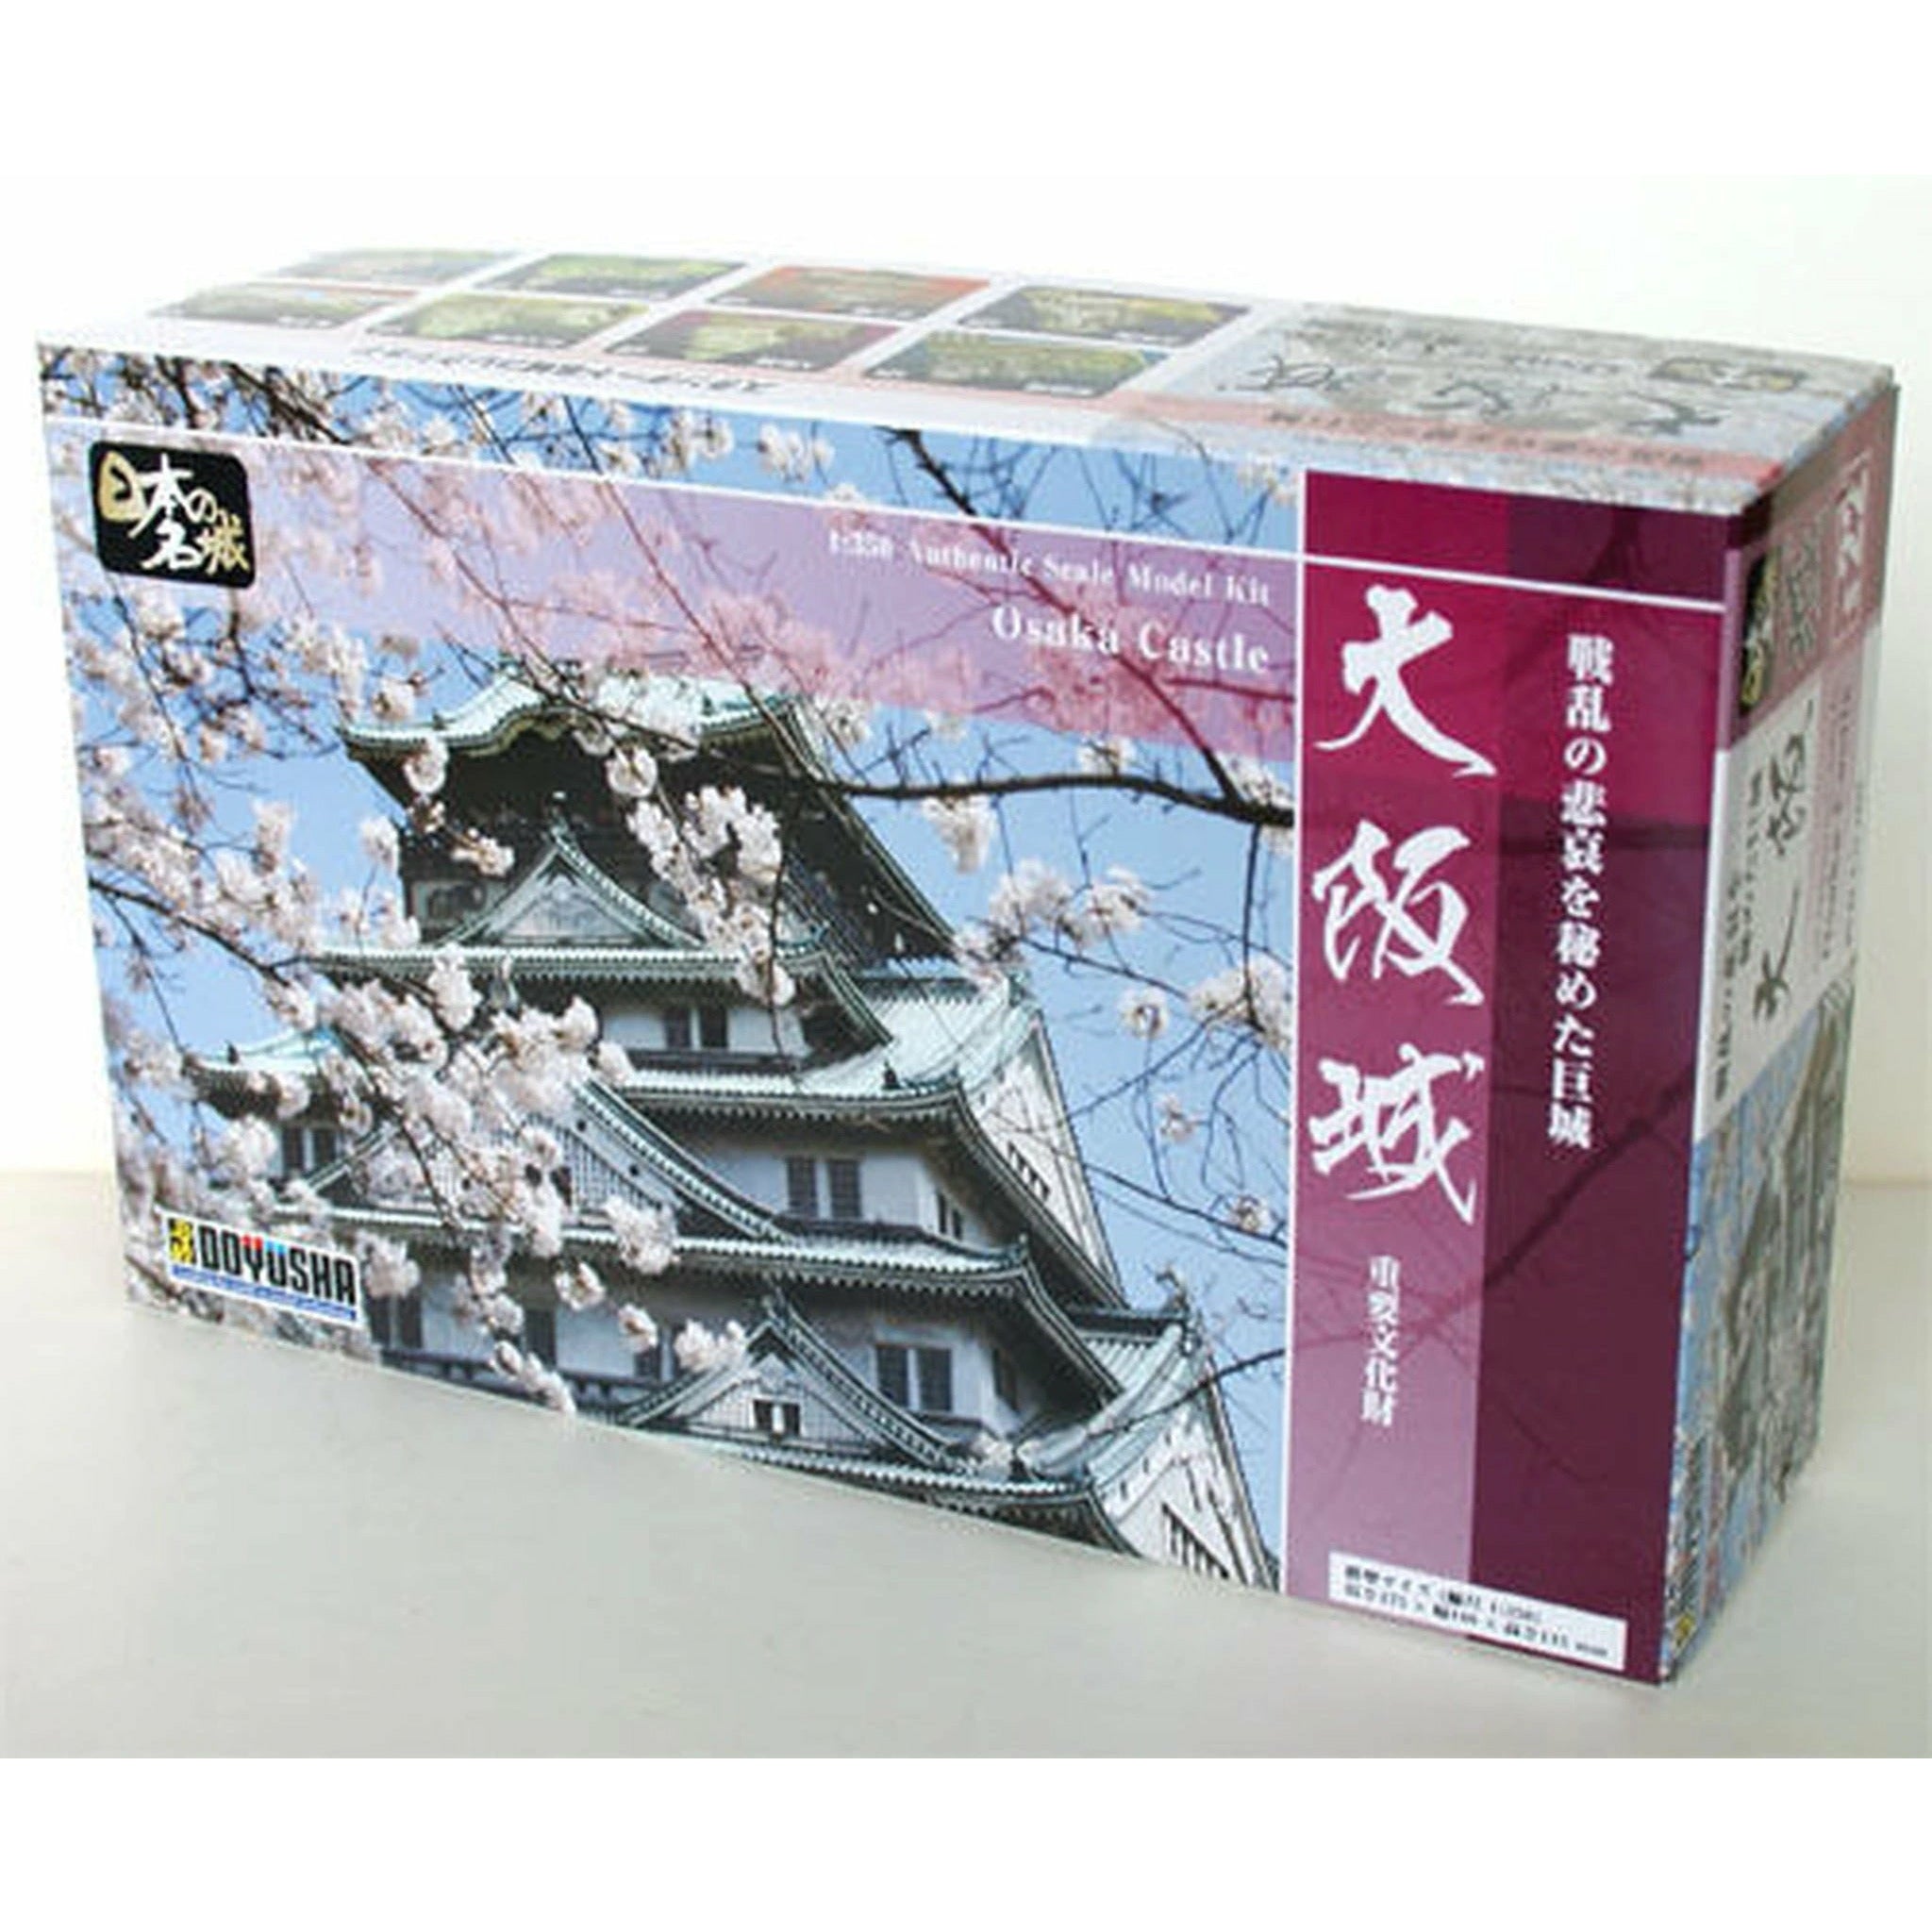 Osaka Castle S-22 1/350 Scenery Kit by Doyusha